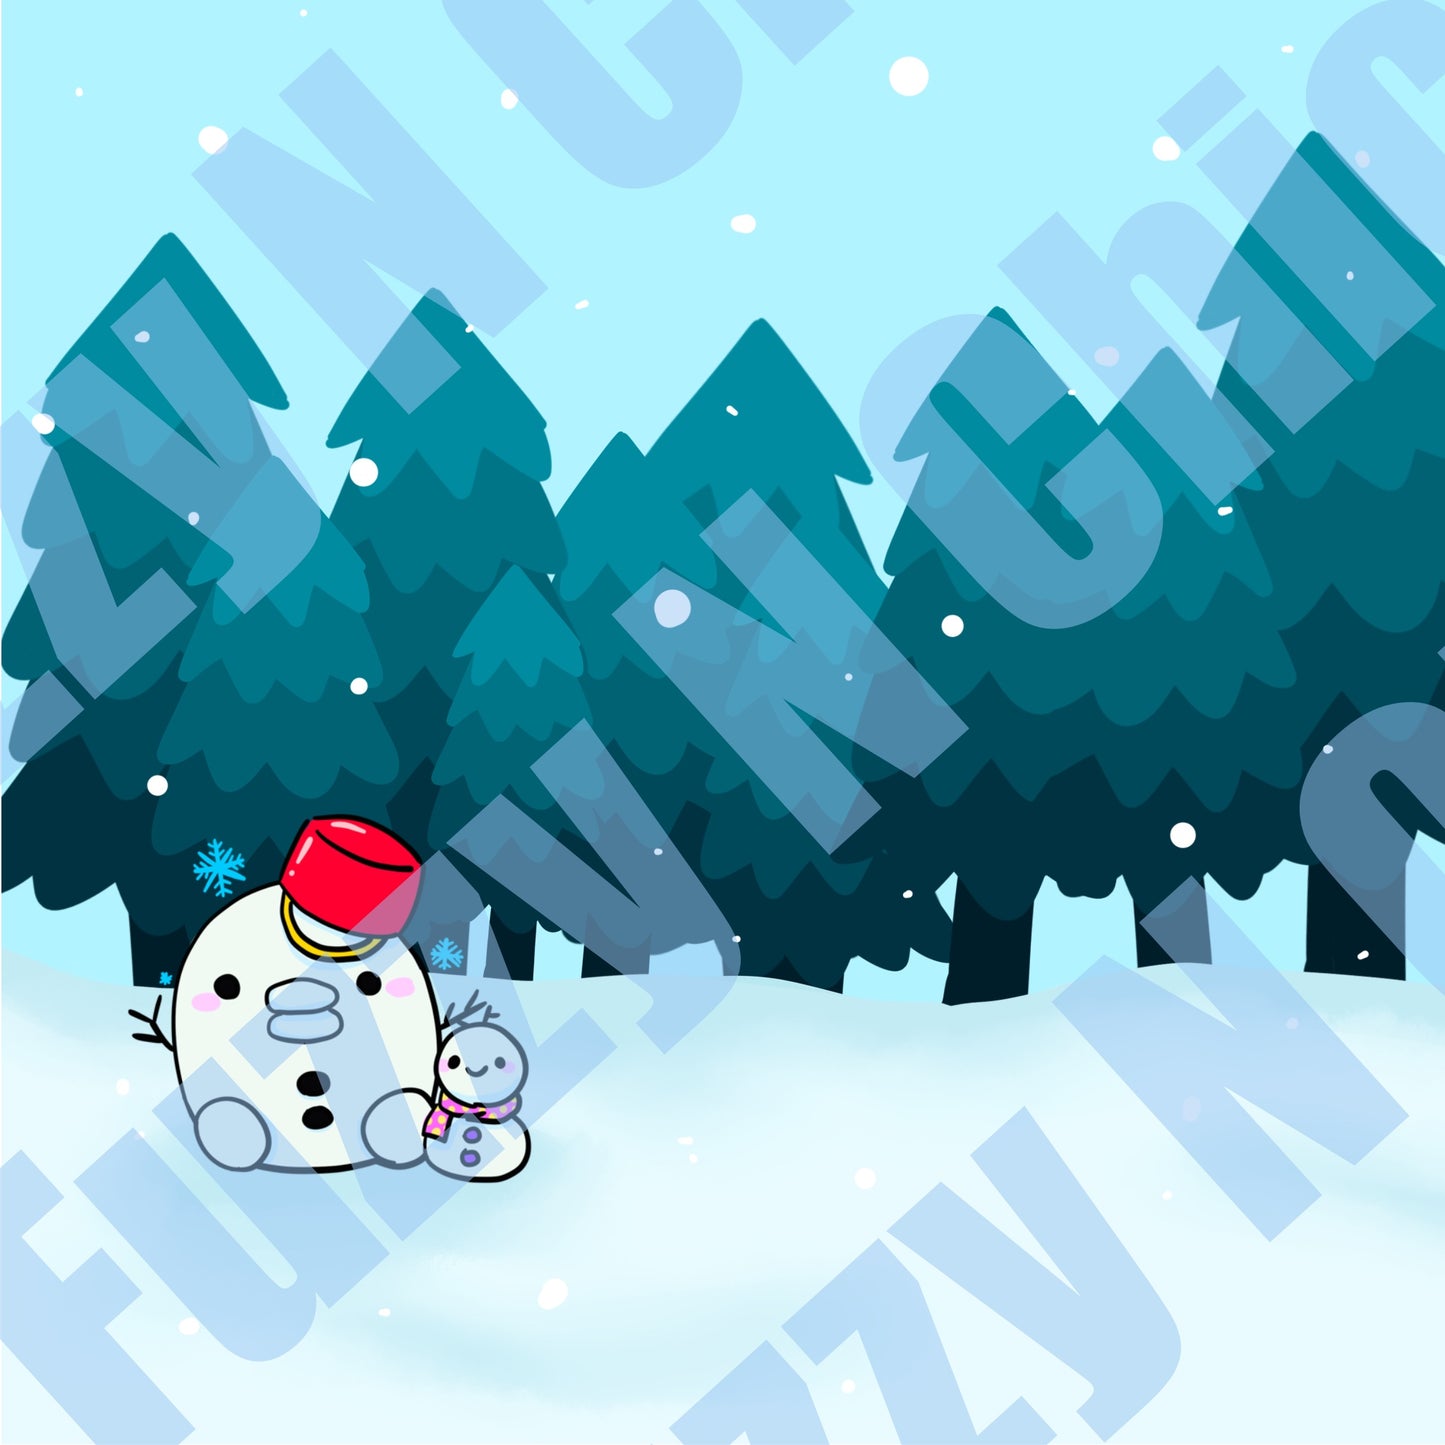 Tamagotchi Kuchipatchi Snowman Printable Poster/Wallpaper (Digital Download)